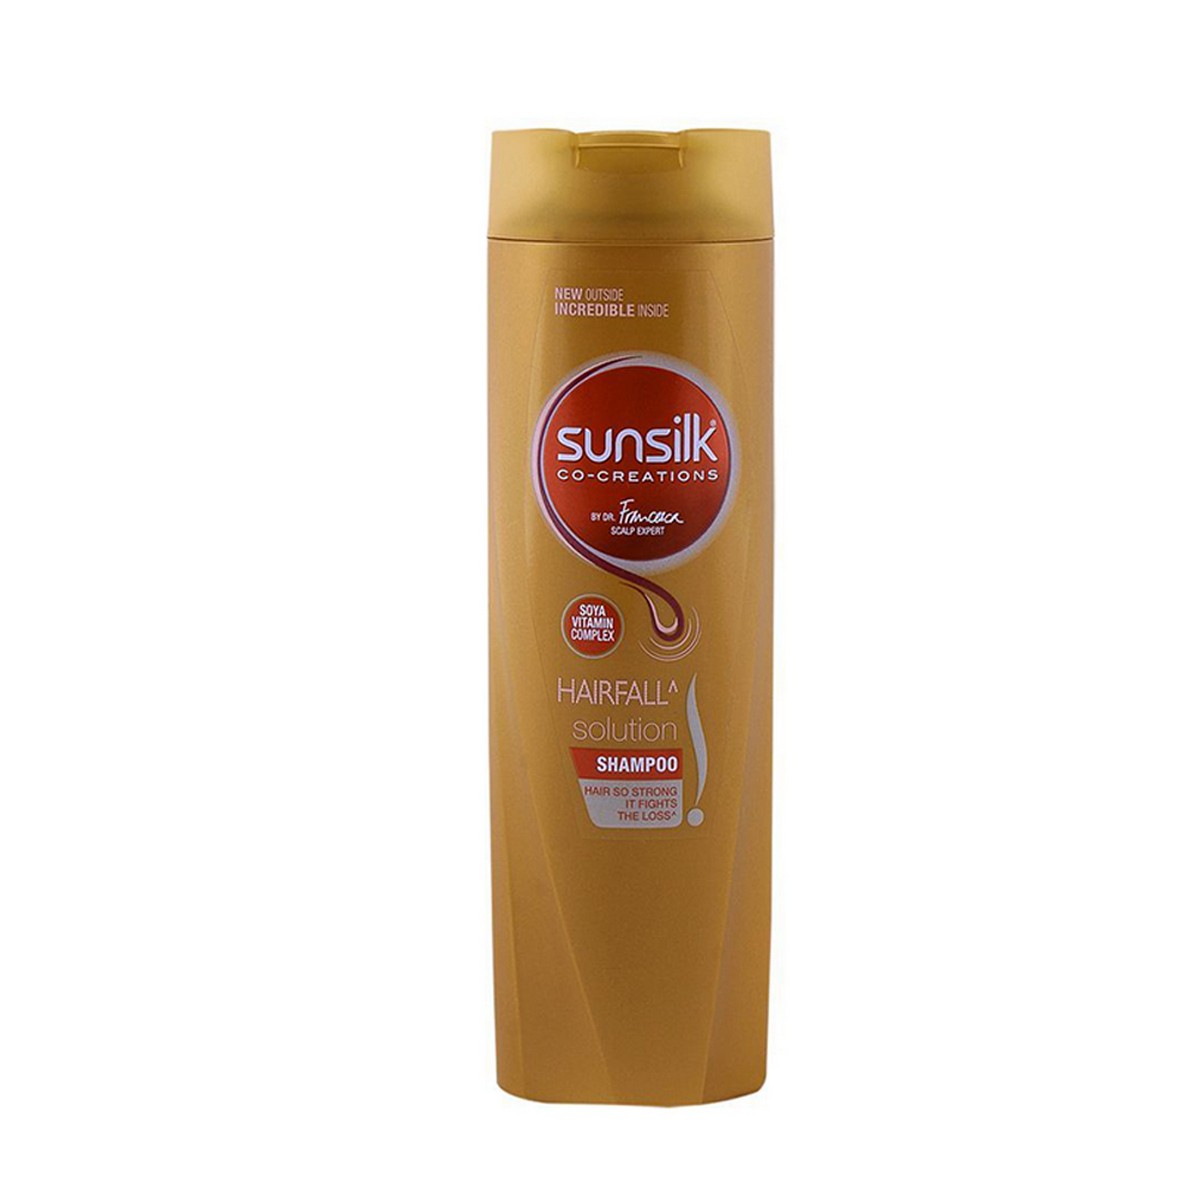 Sunsilk Shampoo Price In Pakistan – 200ml Fall Solution